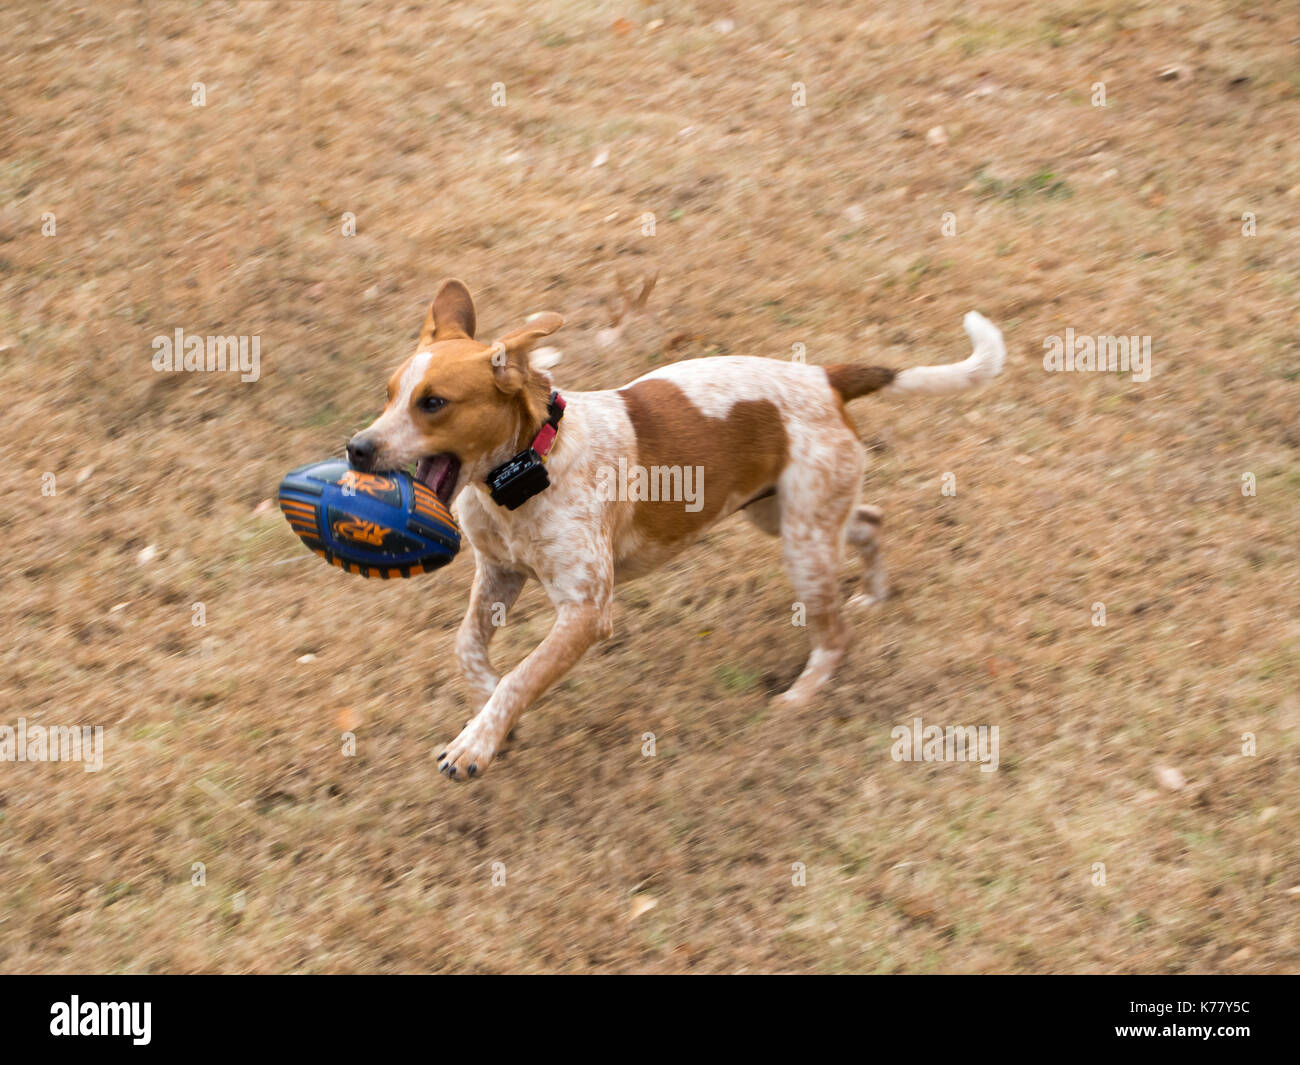 Hound dog running with football Stock Photo